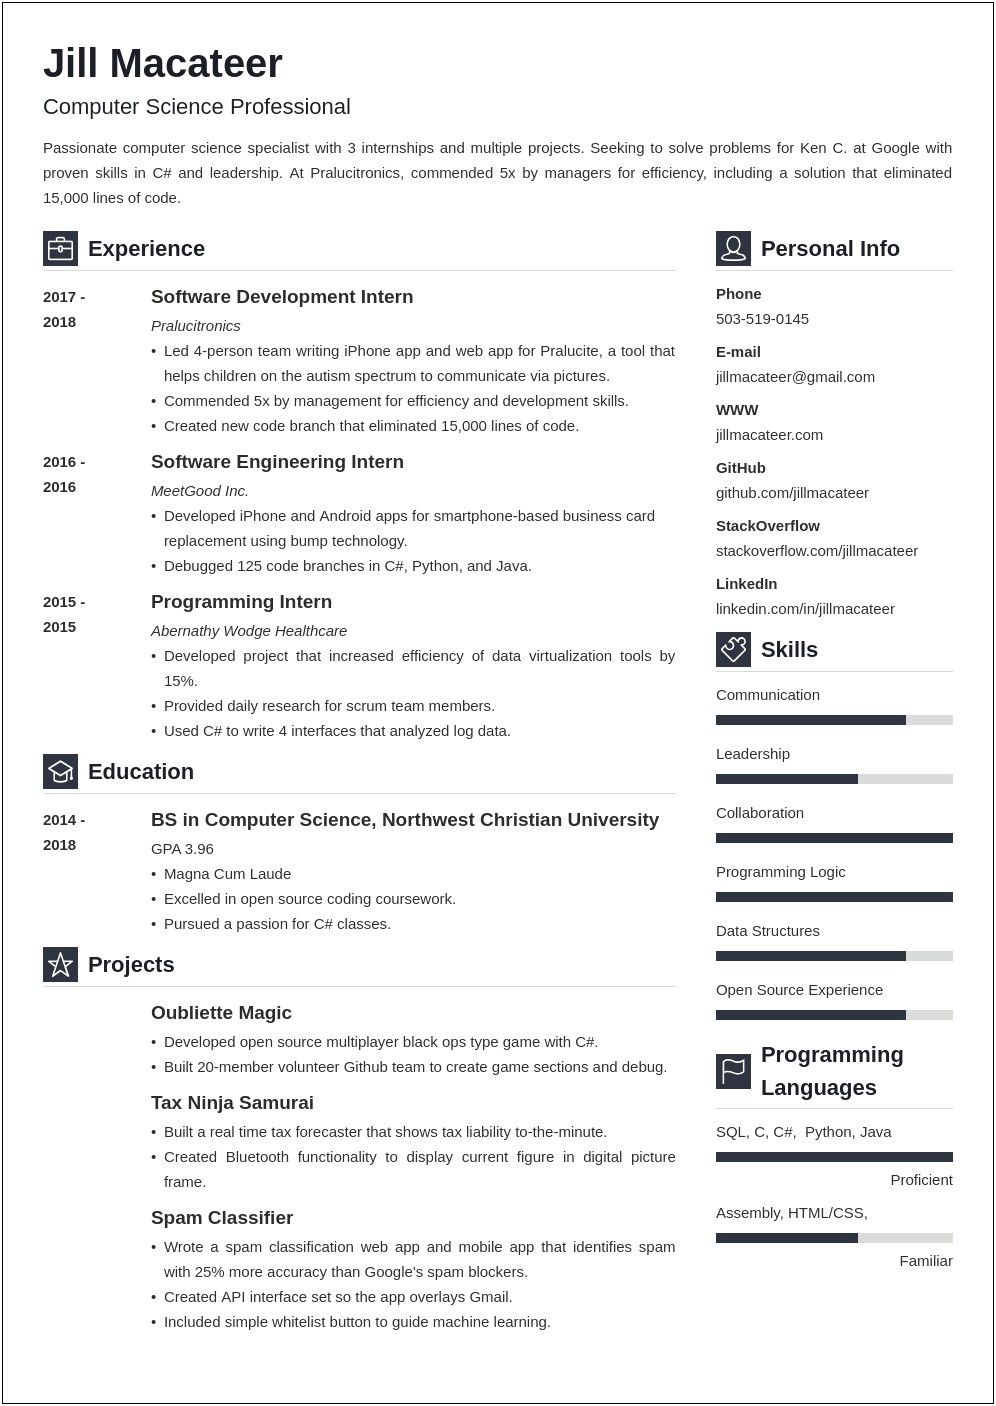 Sample Resume For A Computer Science Undergraduate